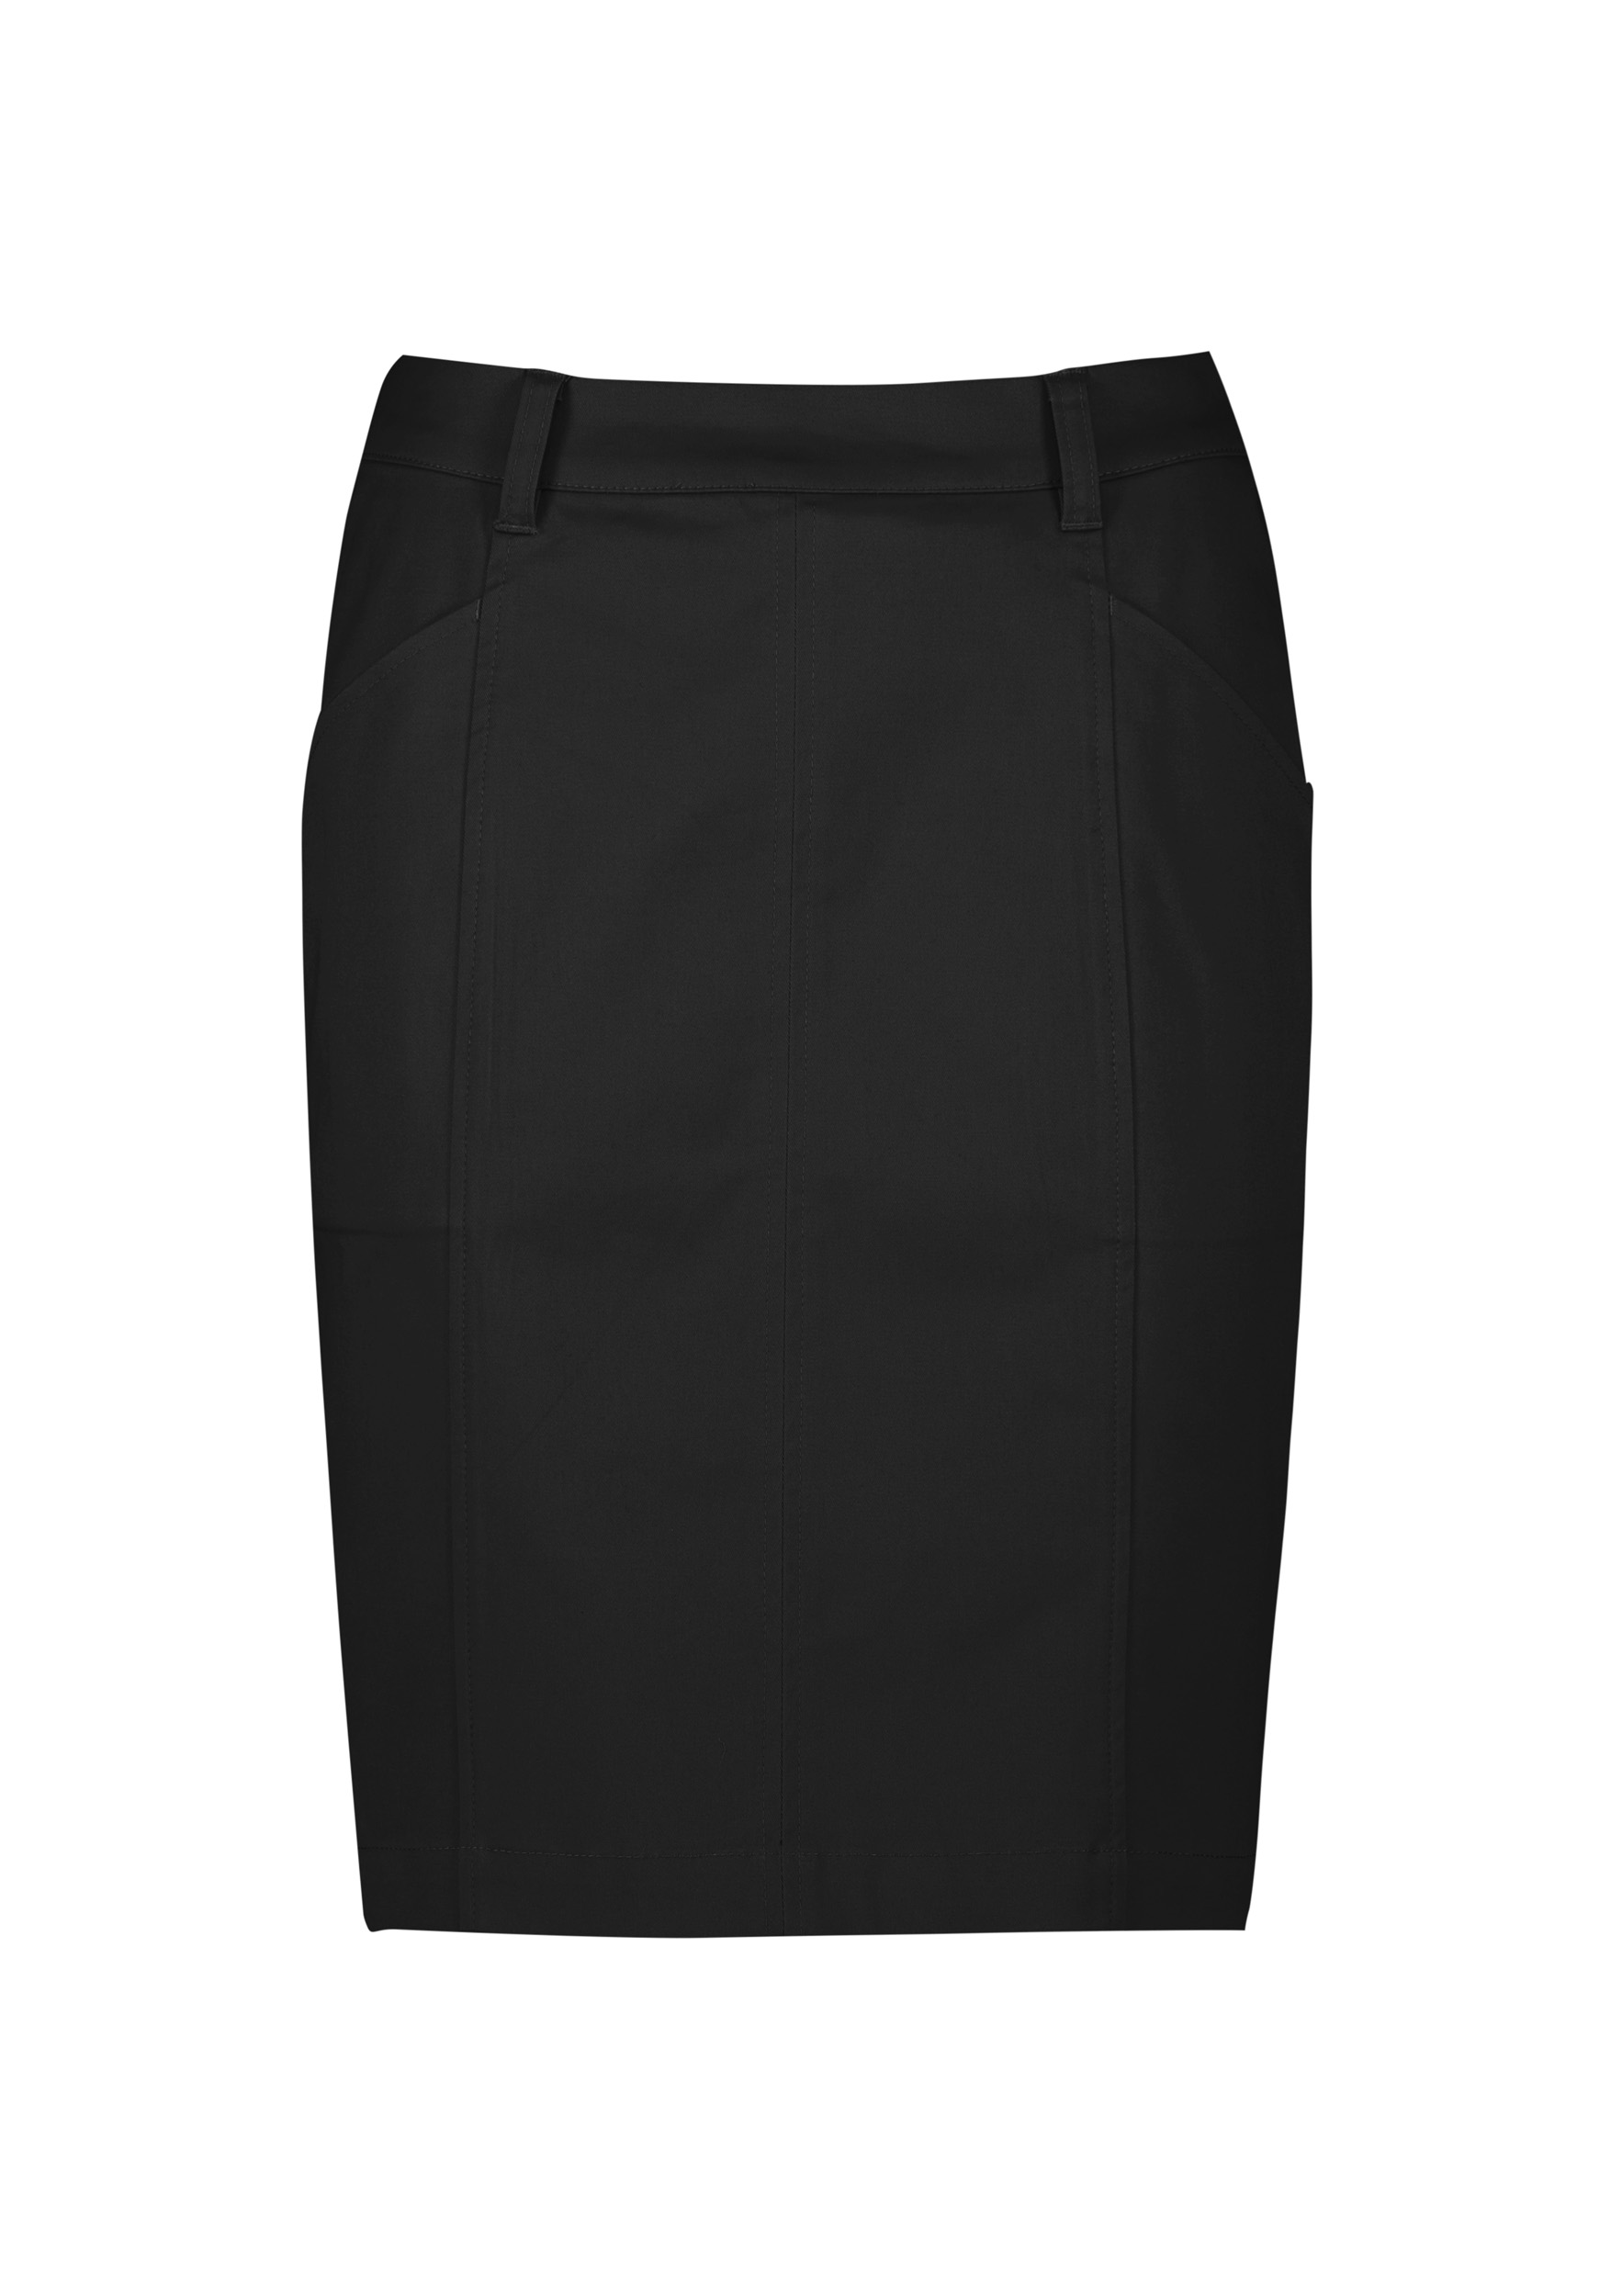 Traveller Womens Chino Skirt by Biz Corporates - Online Uniforms